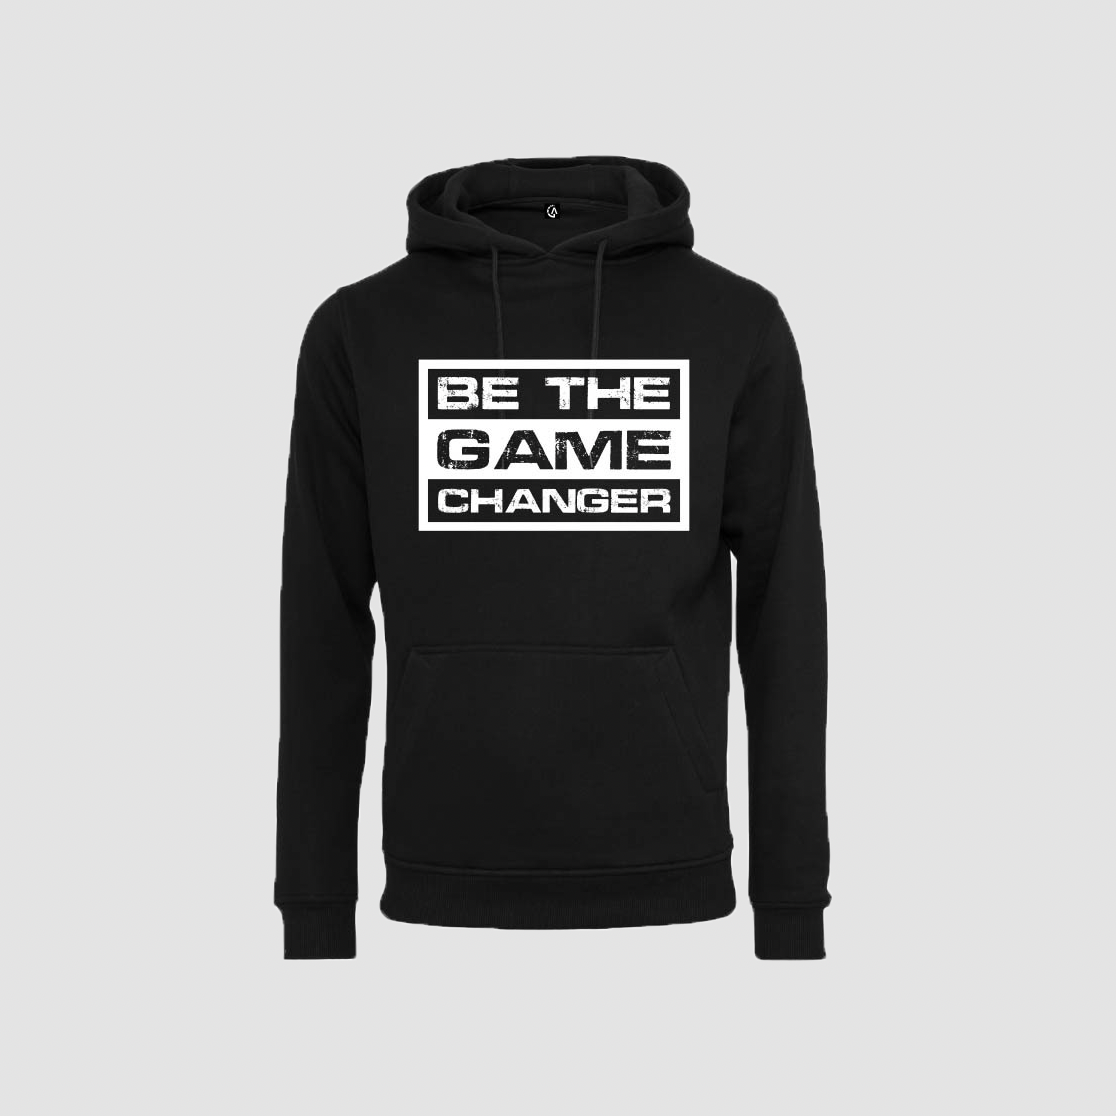 Gamechanger hoodie